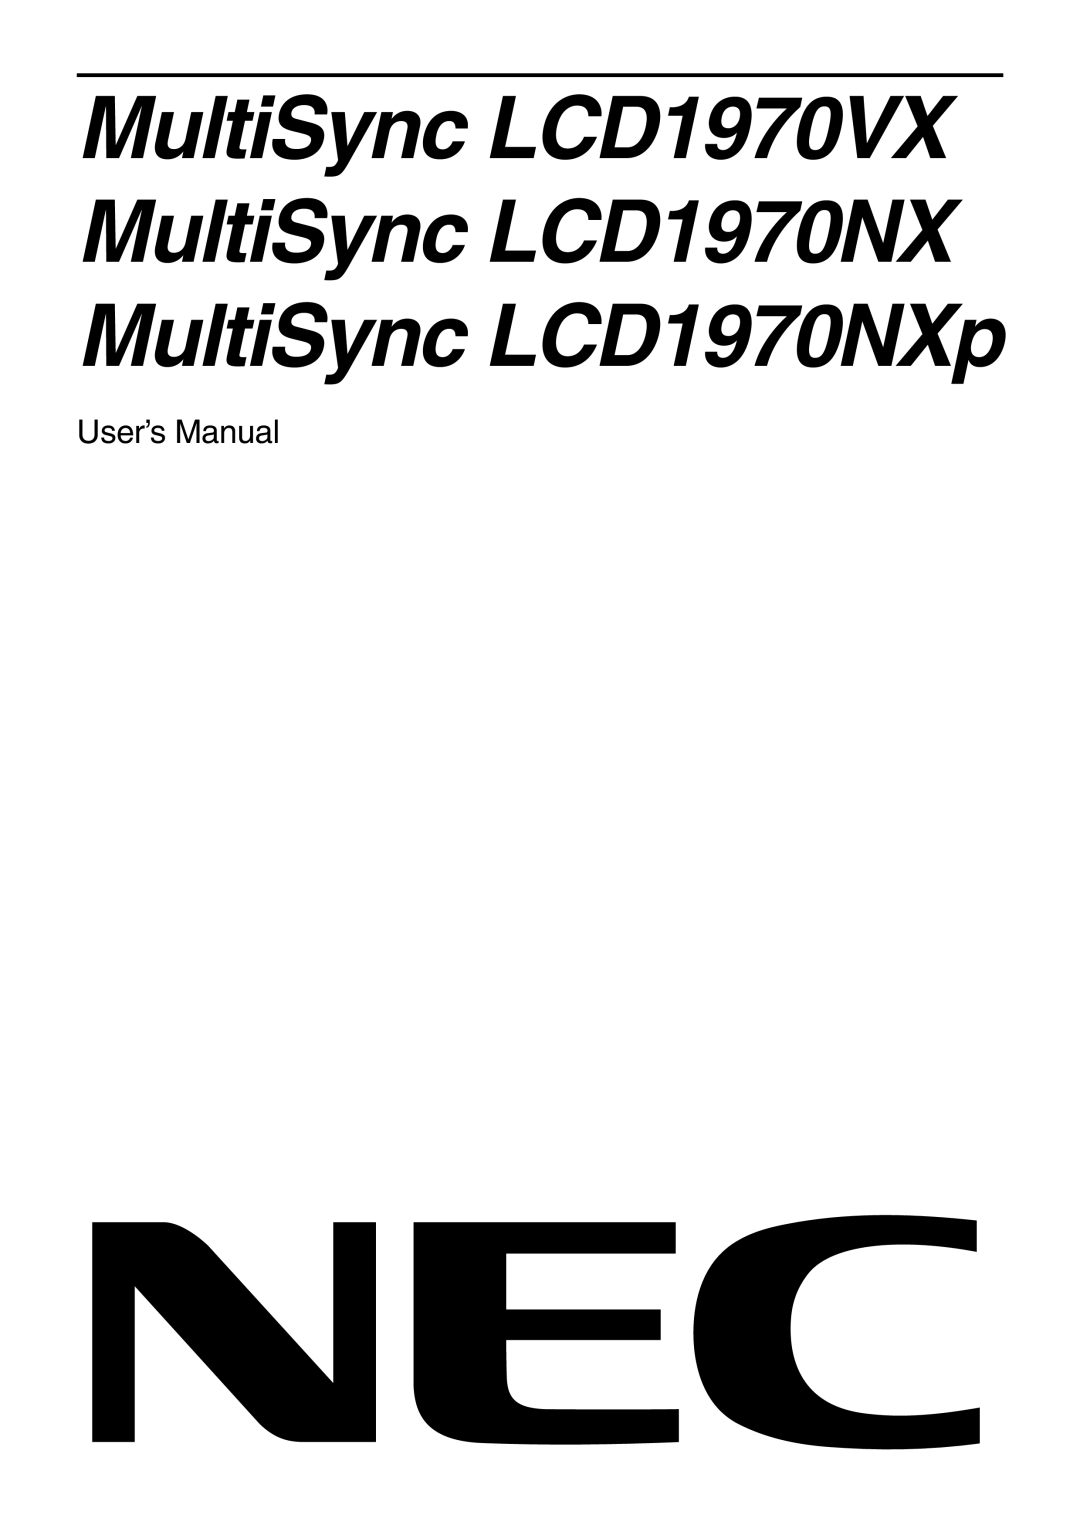 NEC LCD1970NX user manual MultiSync LCD195WXM, UserÕs Manual 